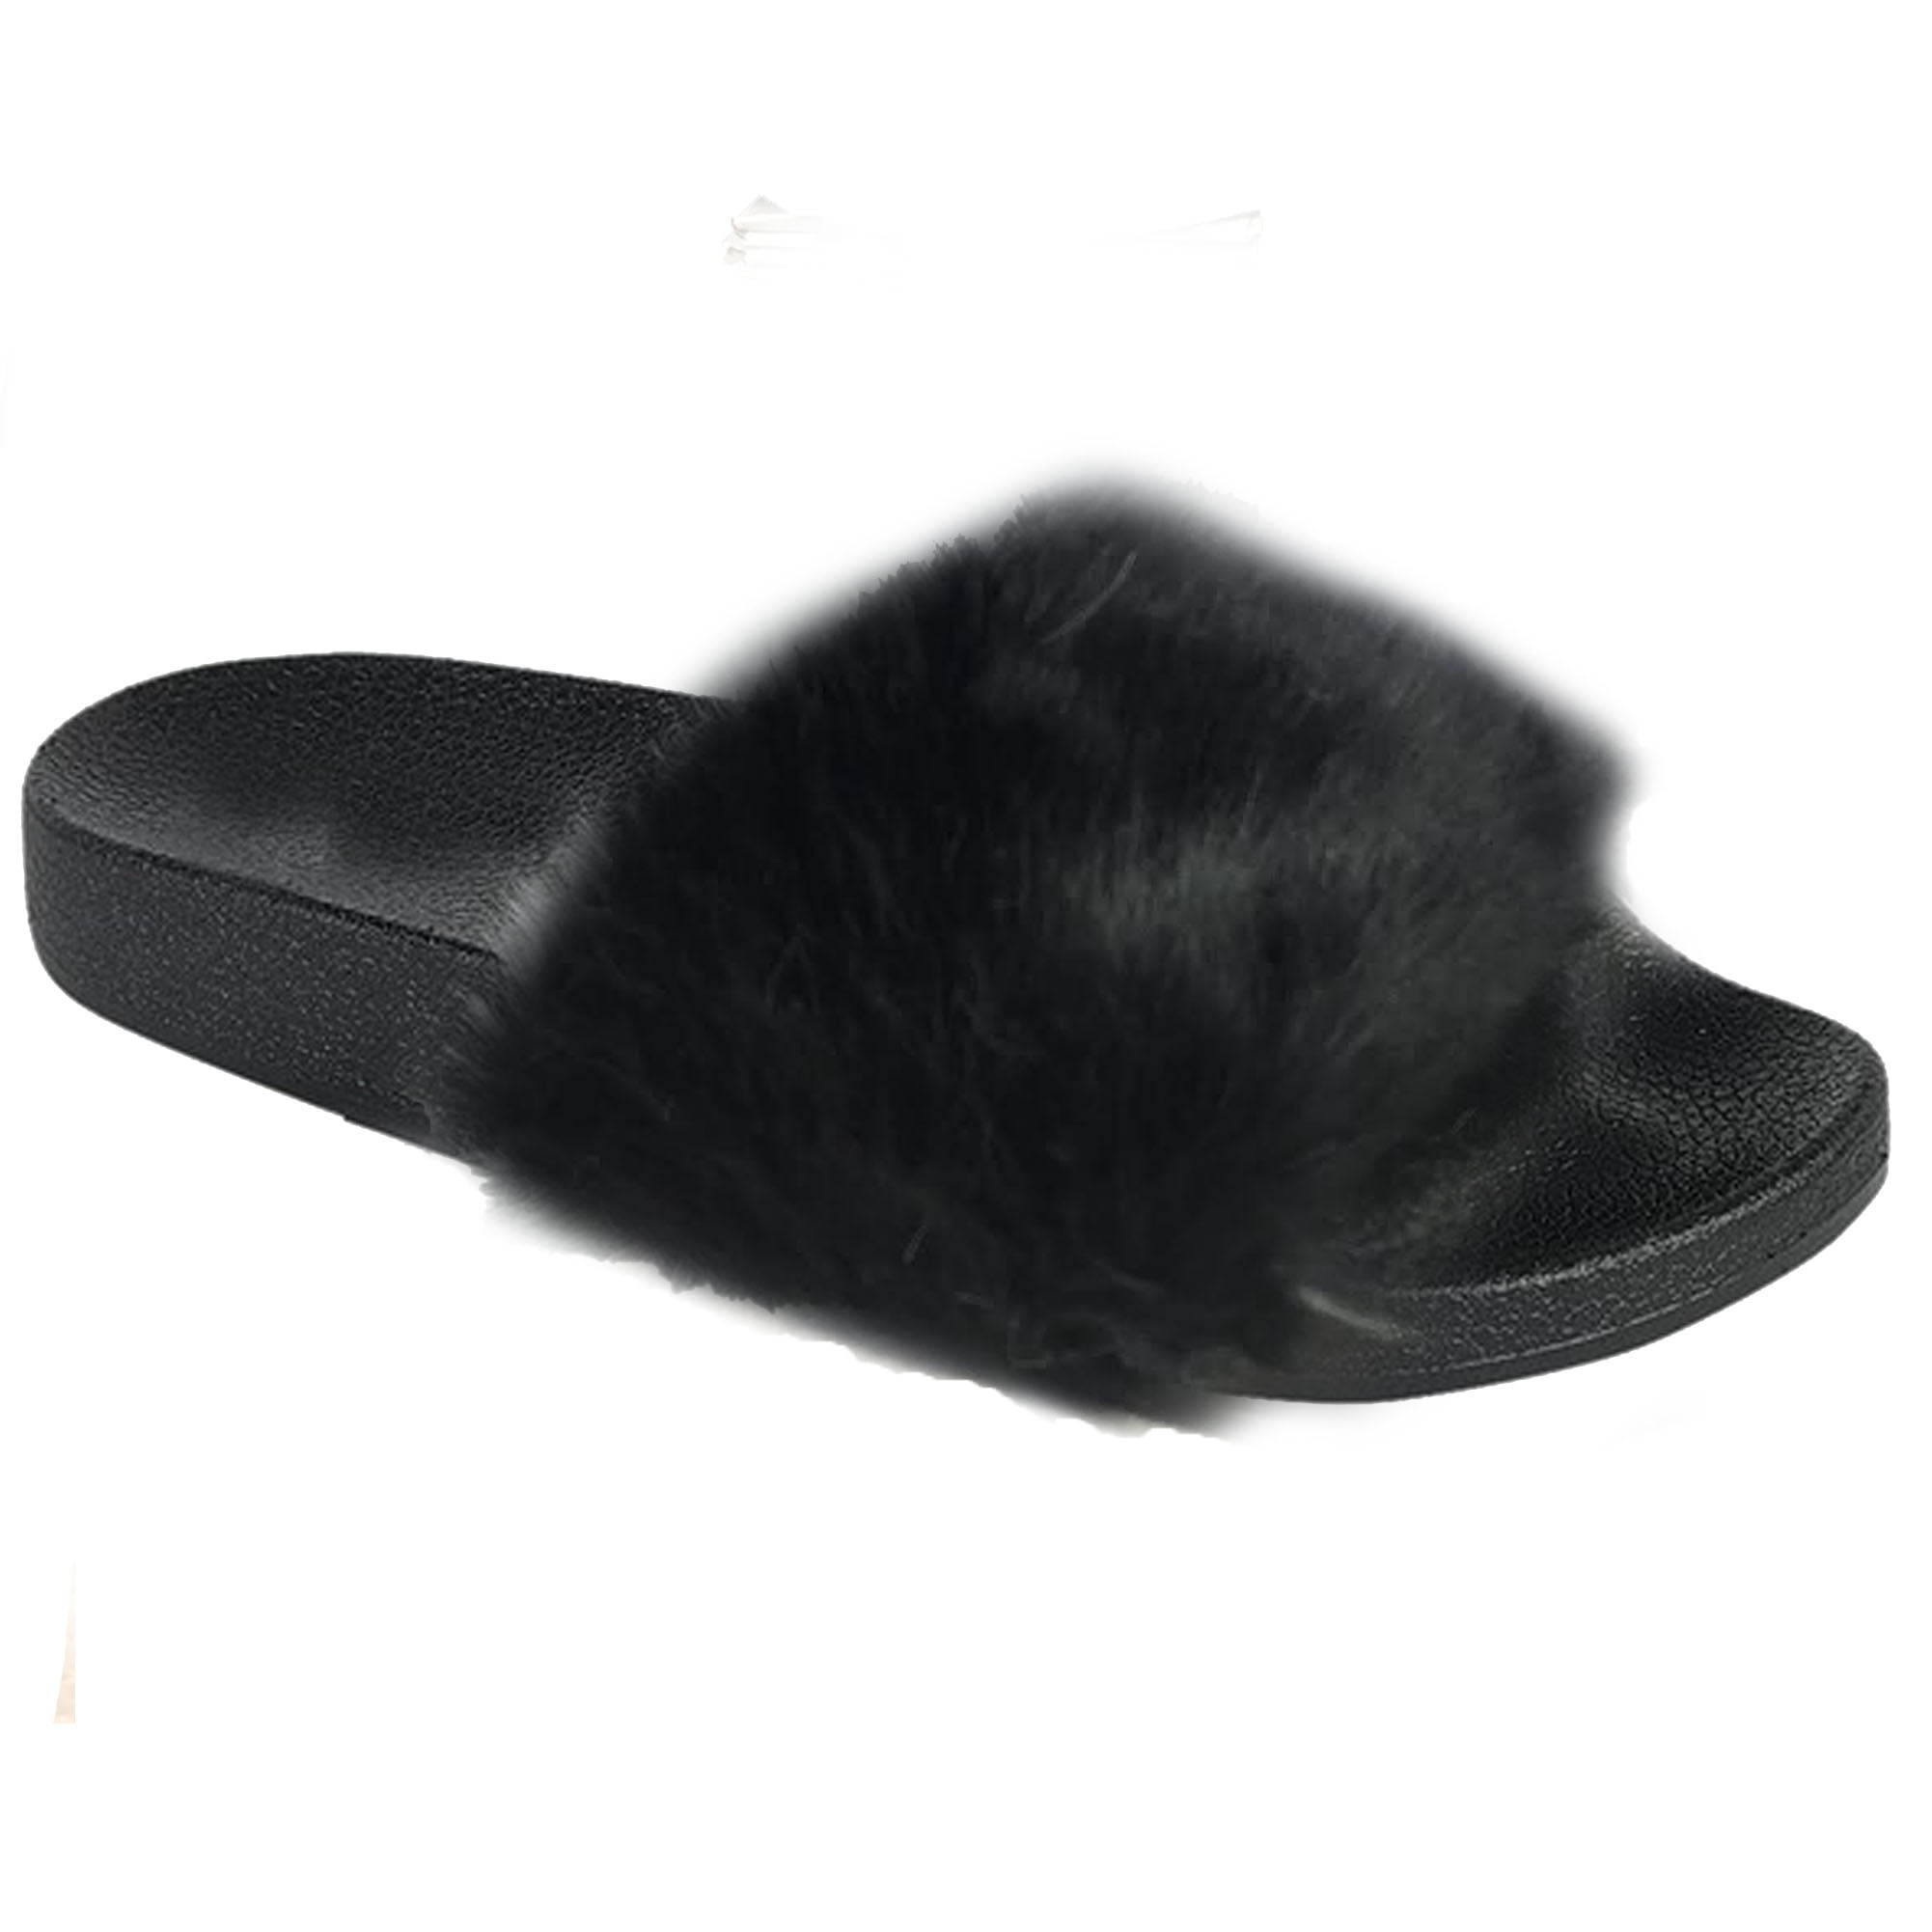 flip flops with fur on them